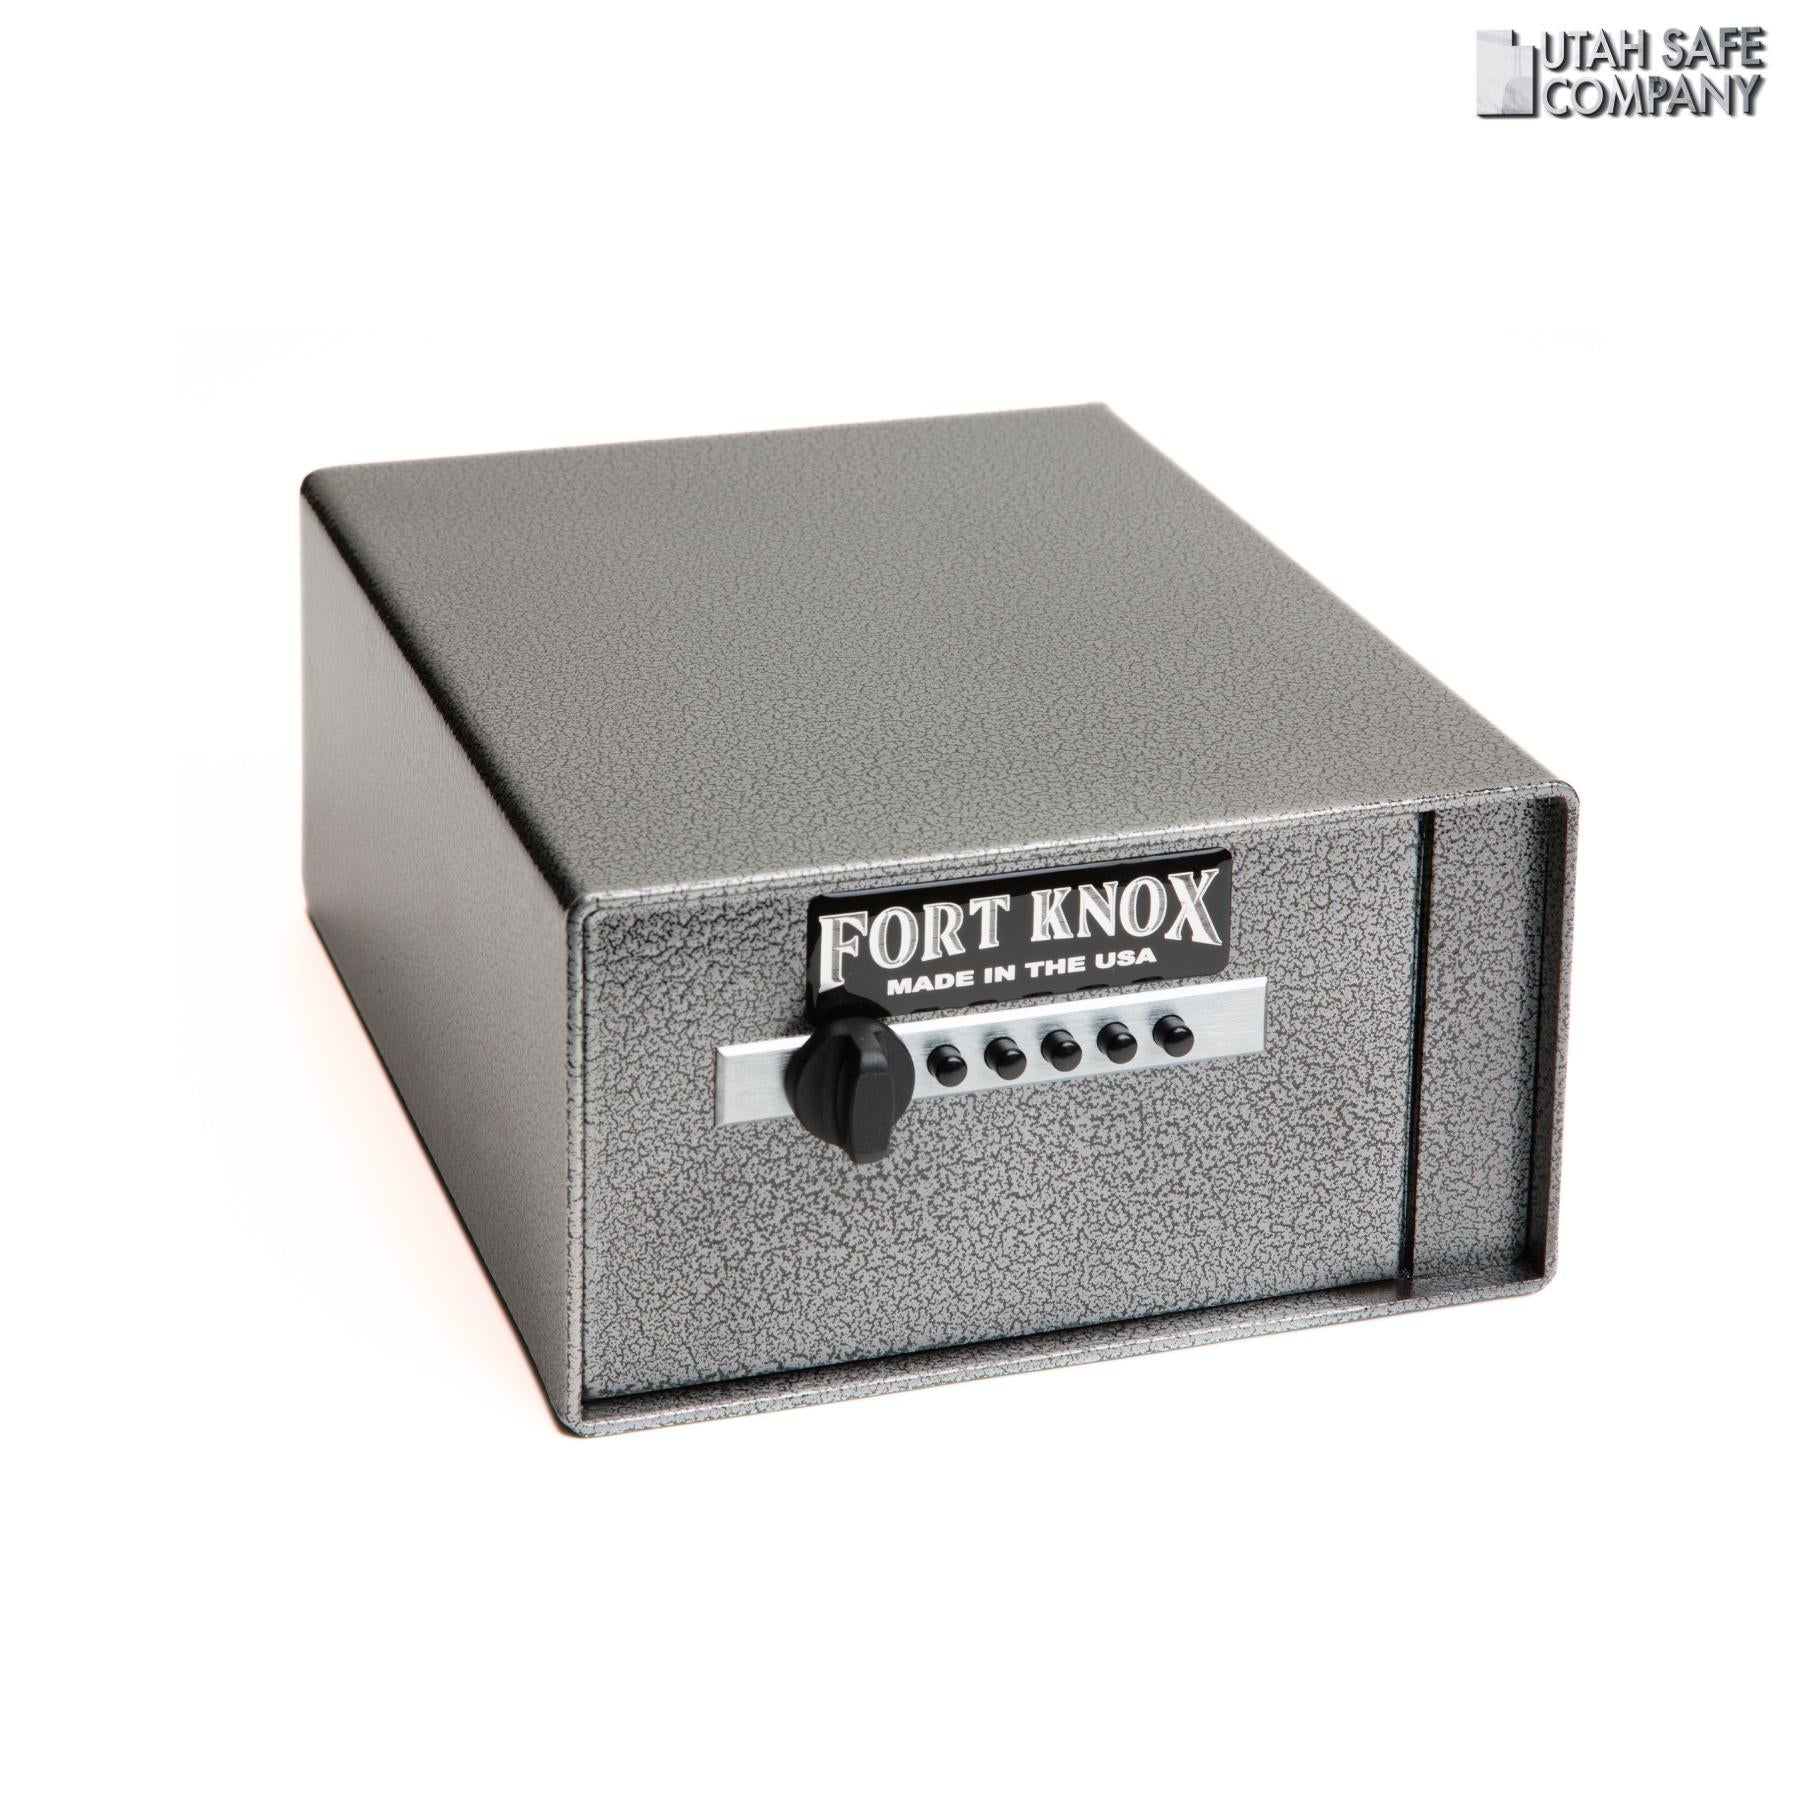 Fort Knox Personal Pistol Box PB - Utah Safe Company